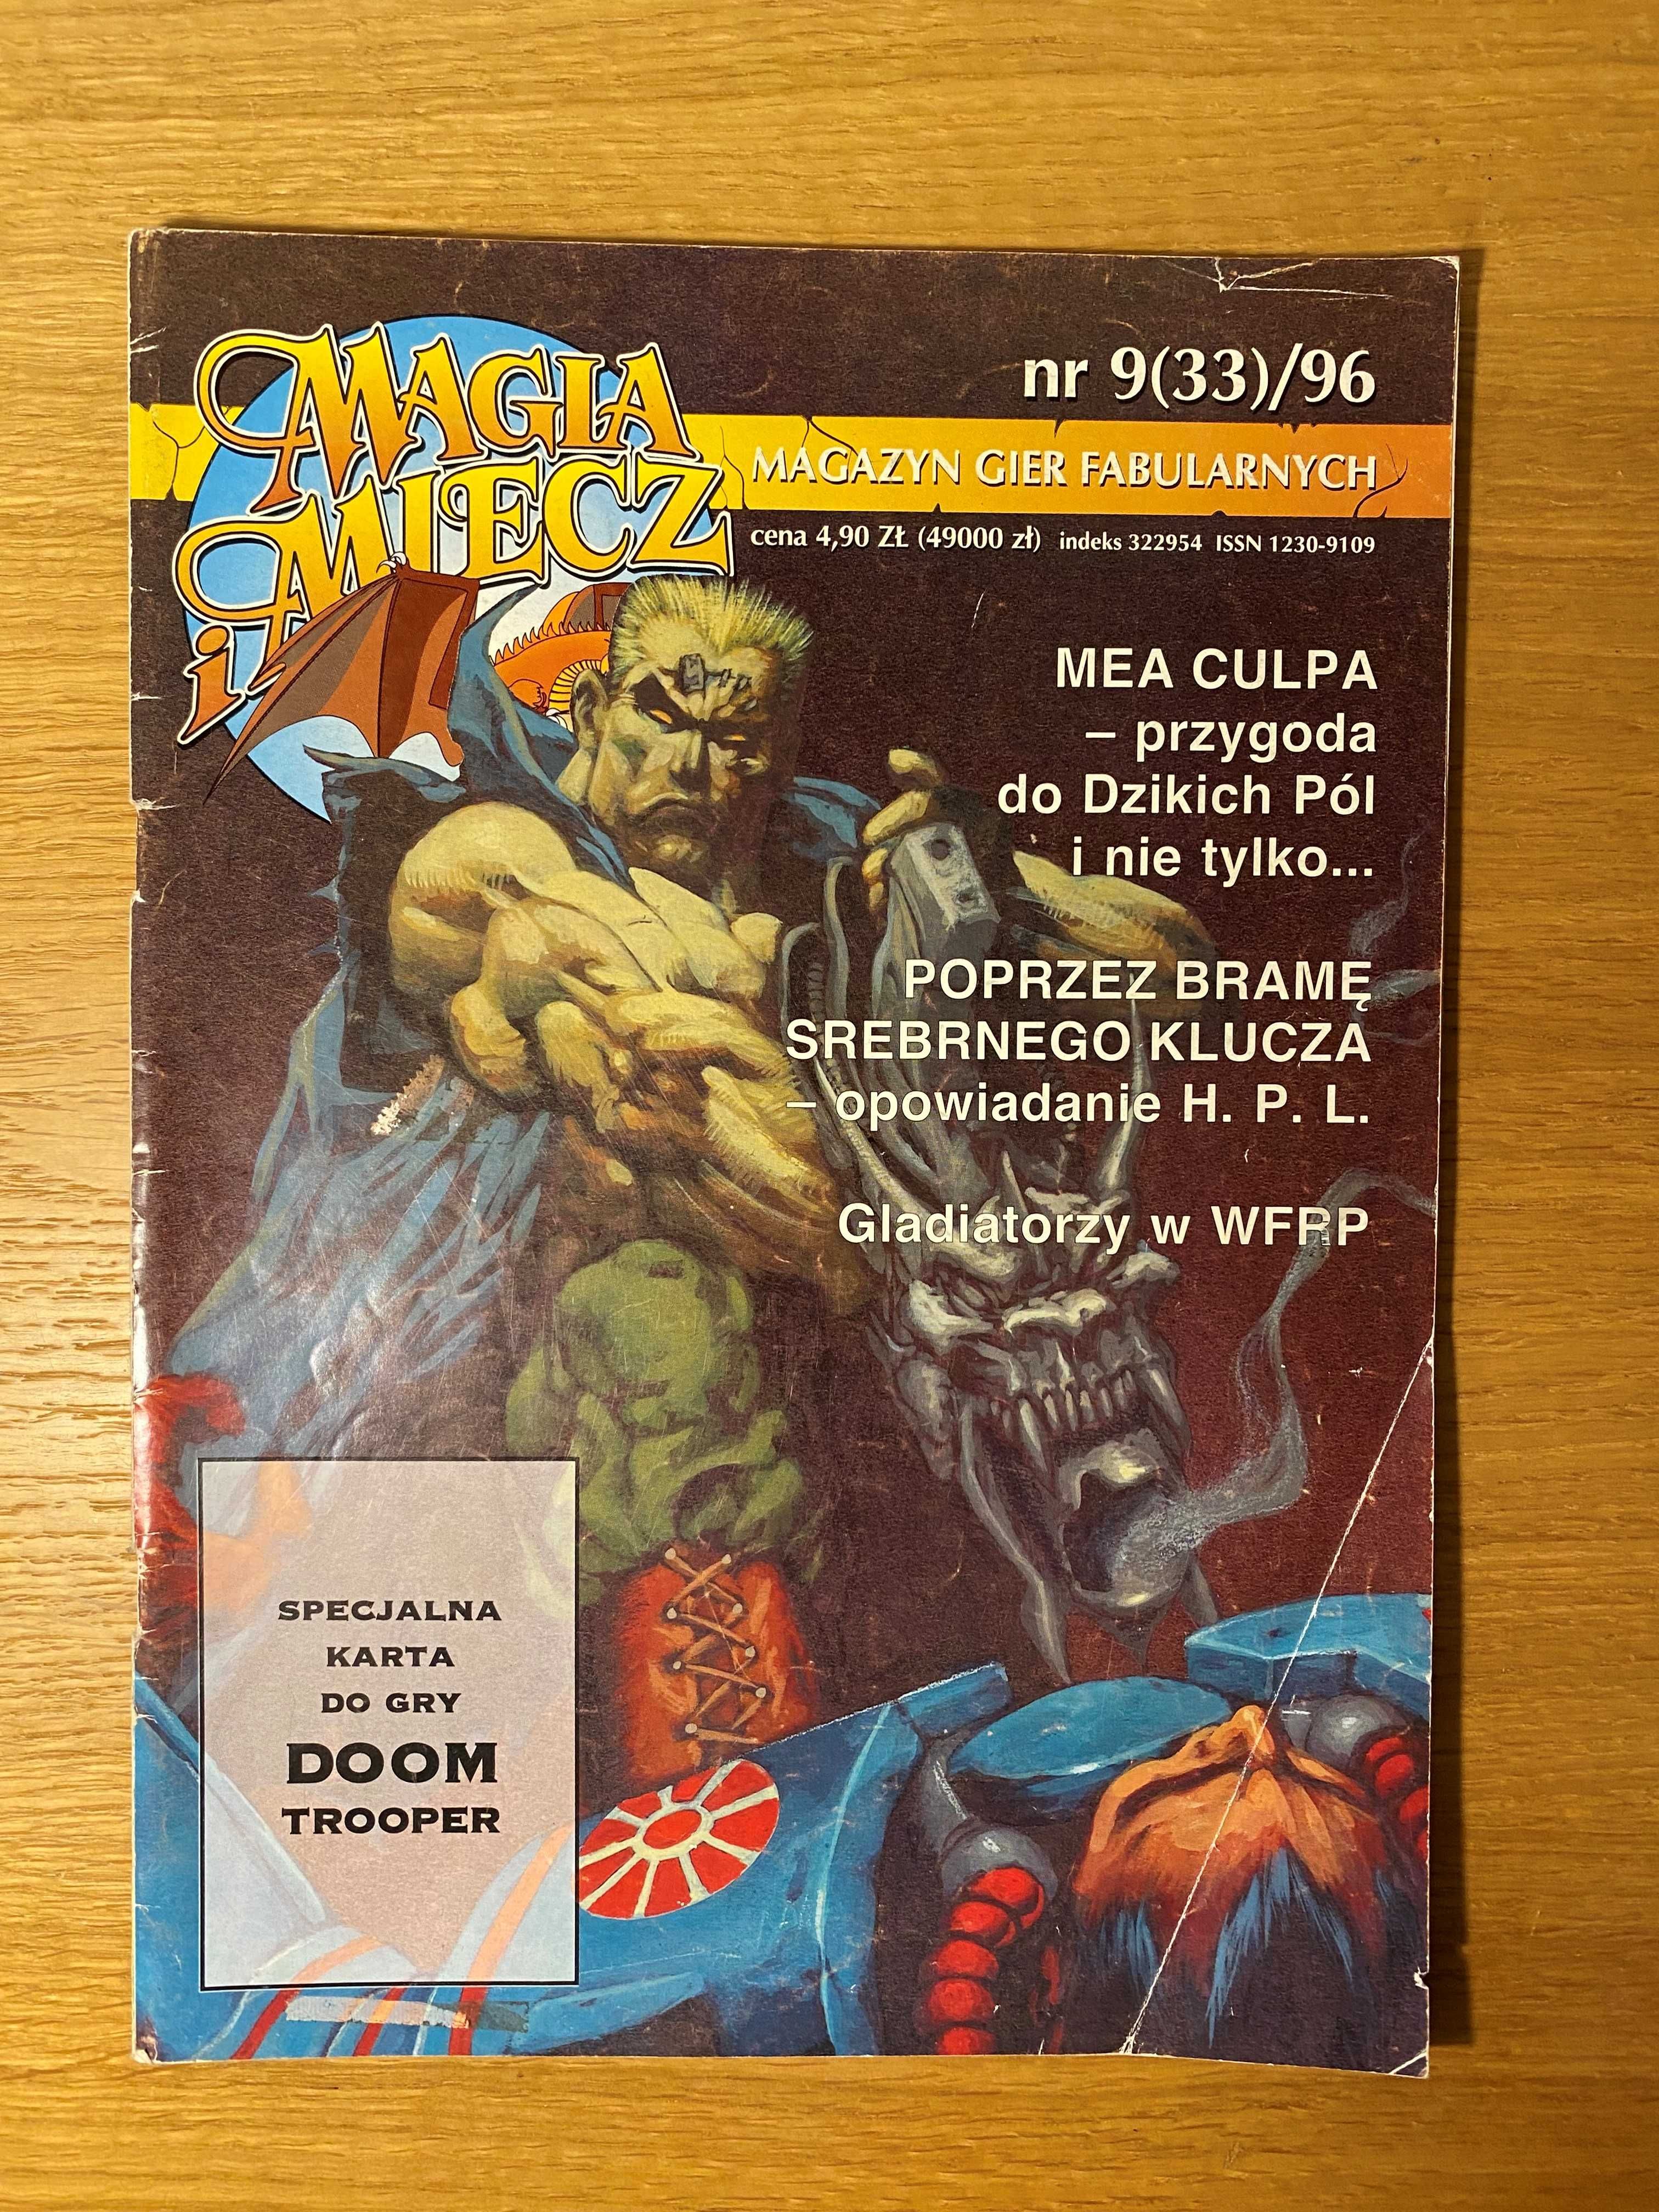 "MAGIA I MIECZ" magazyn gier fabularnych nr 9 (33) / 96 UNIKAT !!!